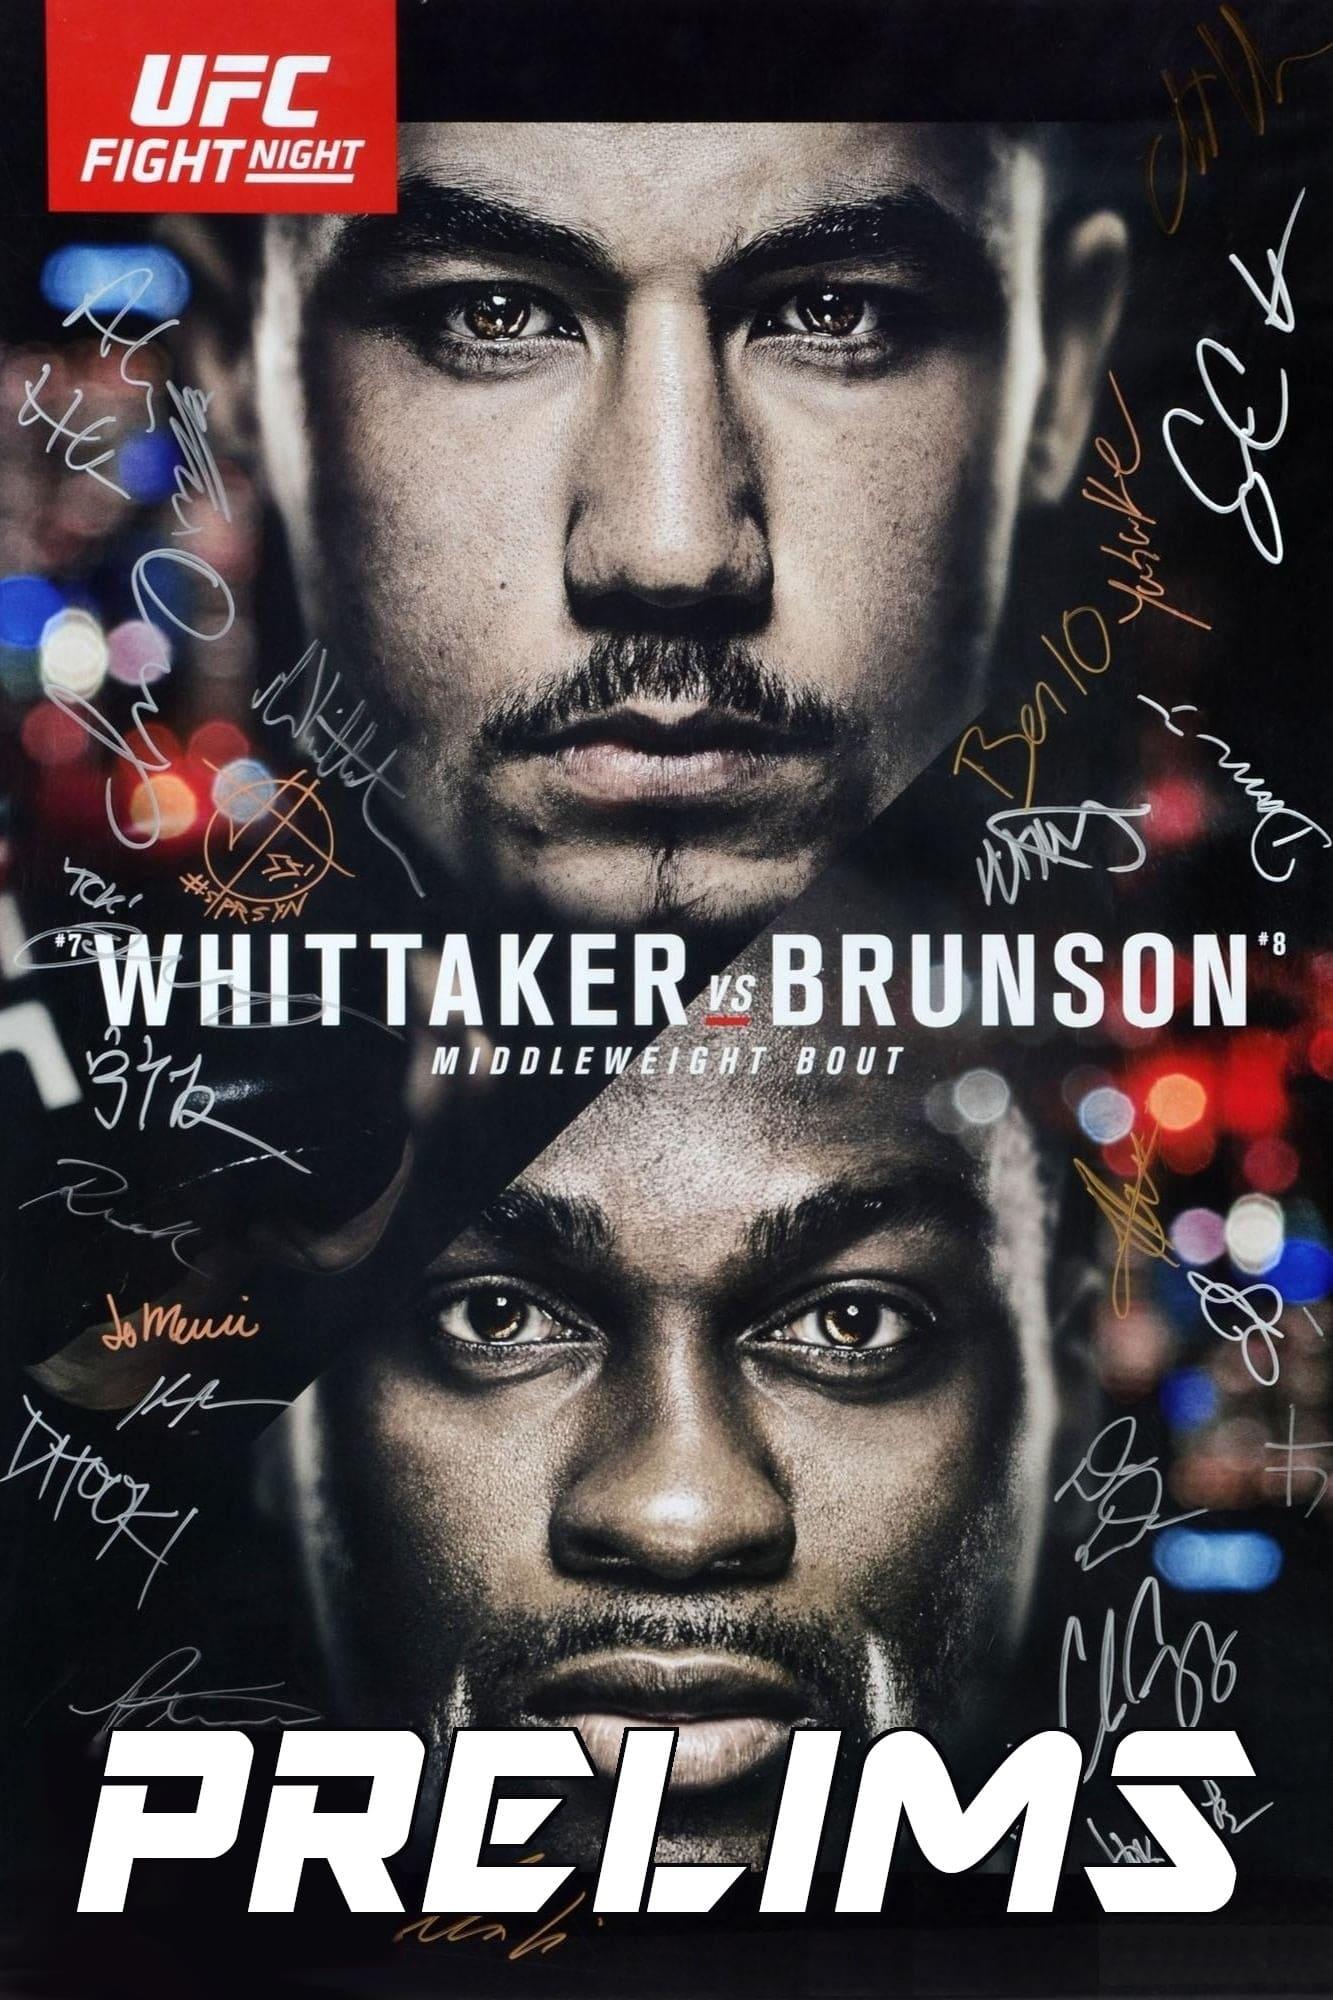 UFC Fight Night 101: Whittaker vs. Brunson poster